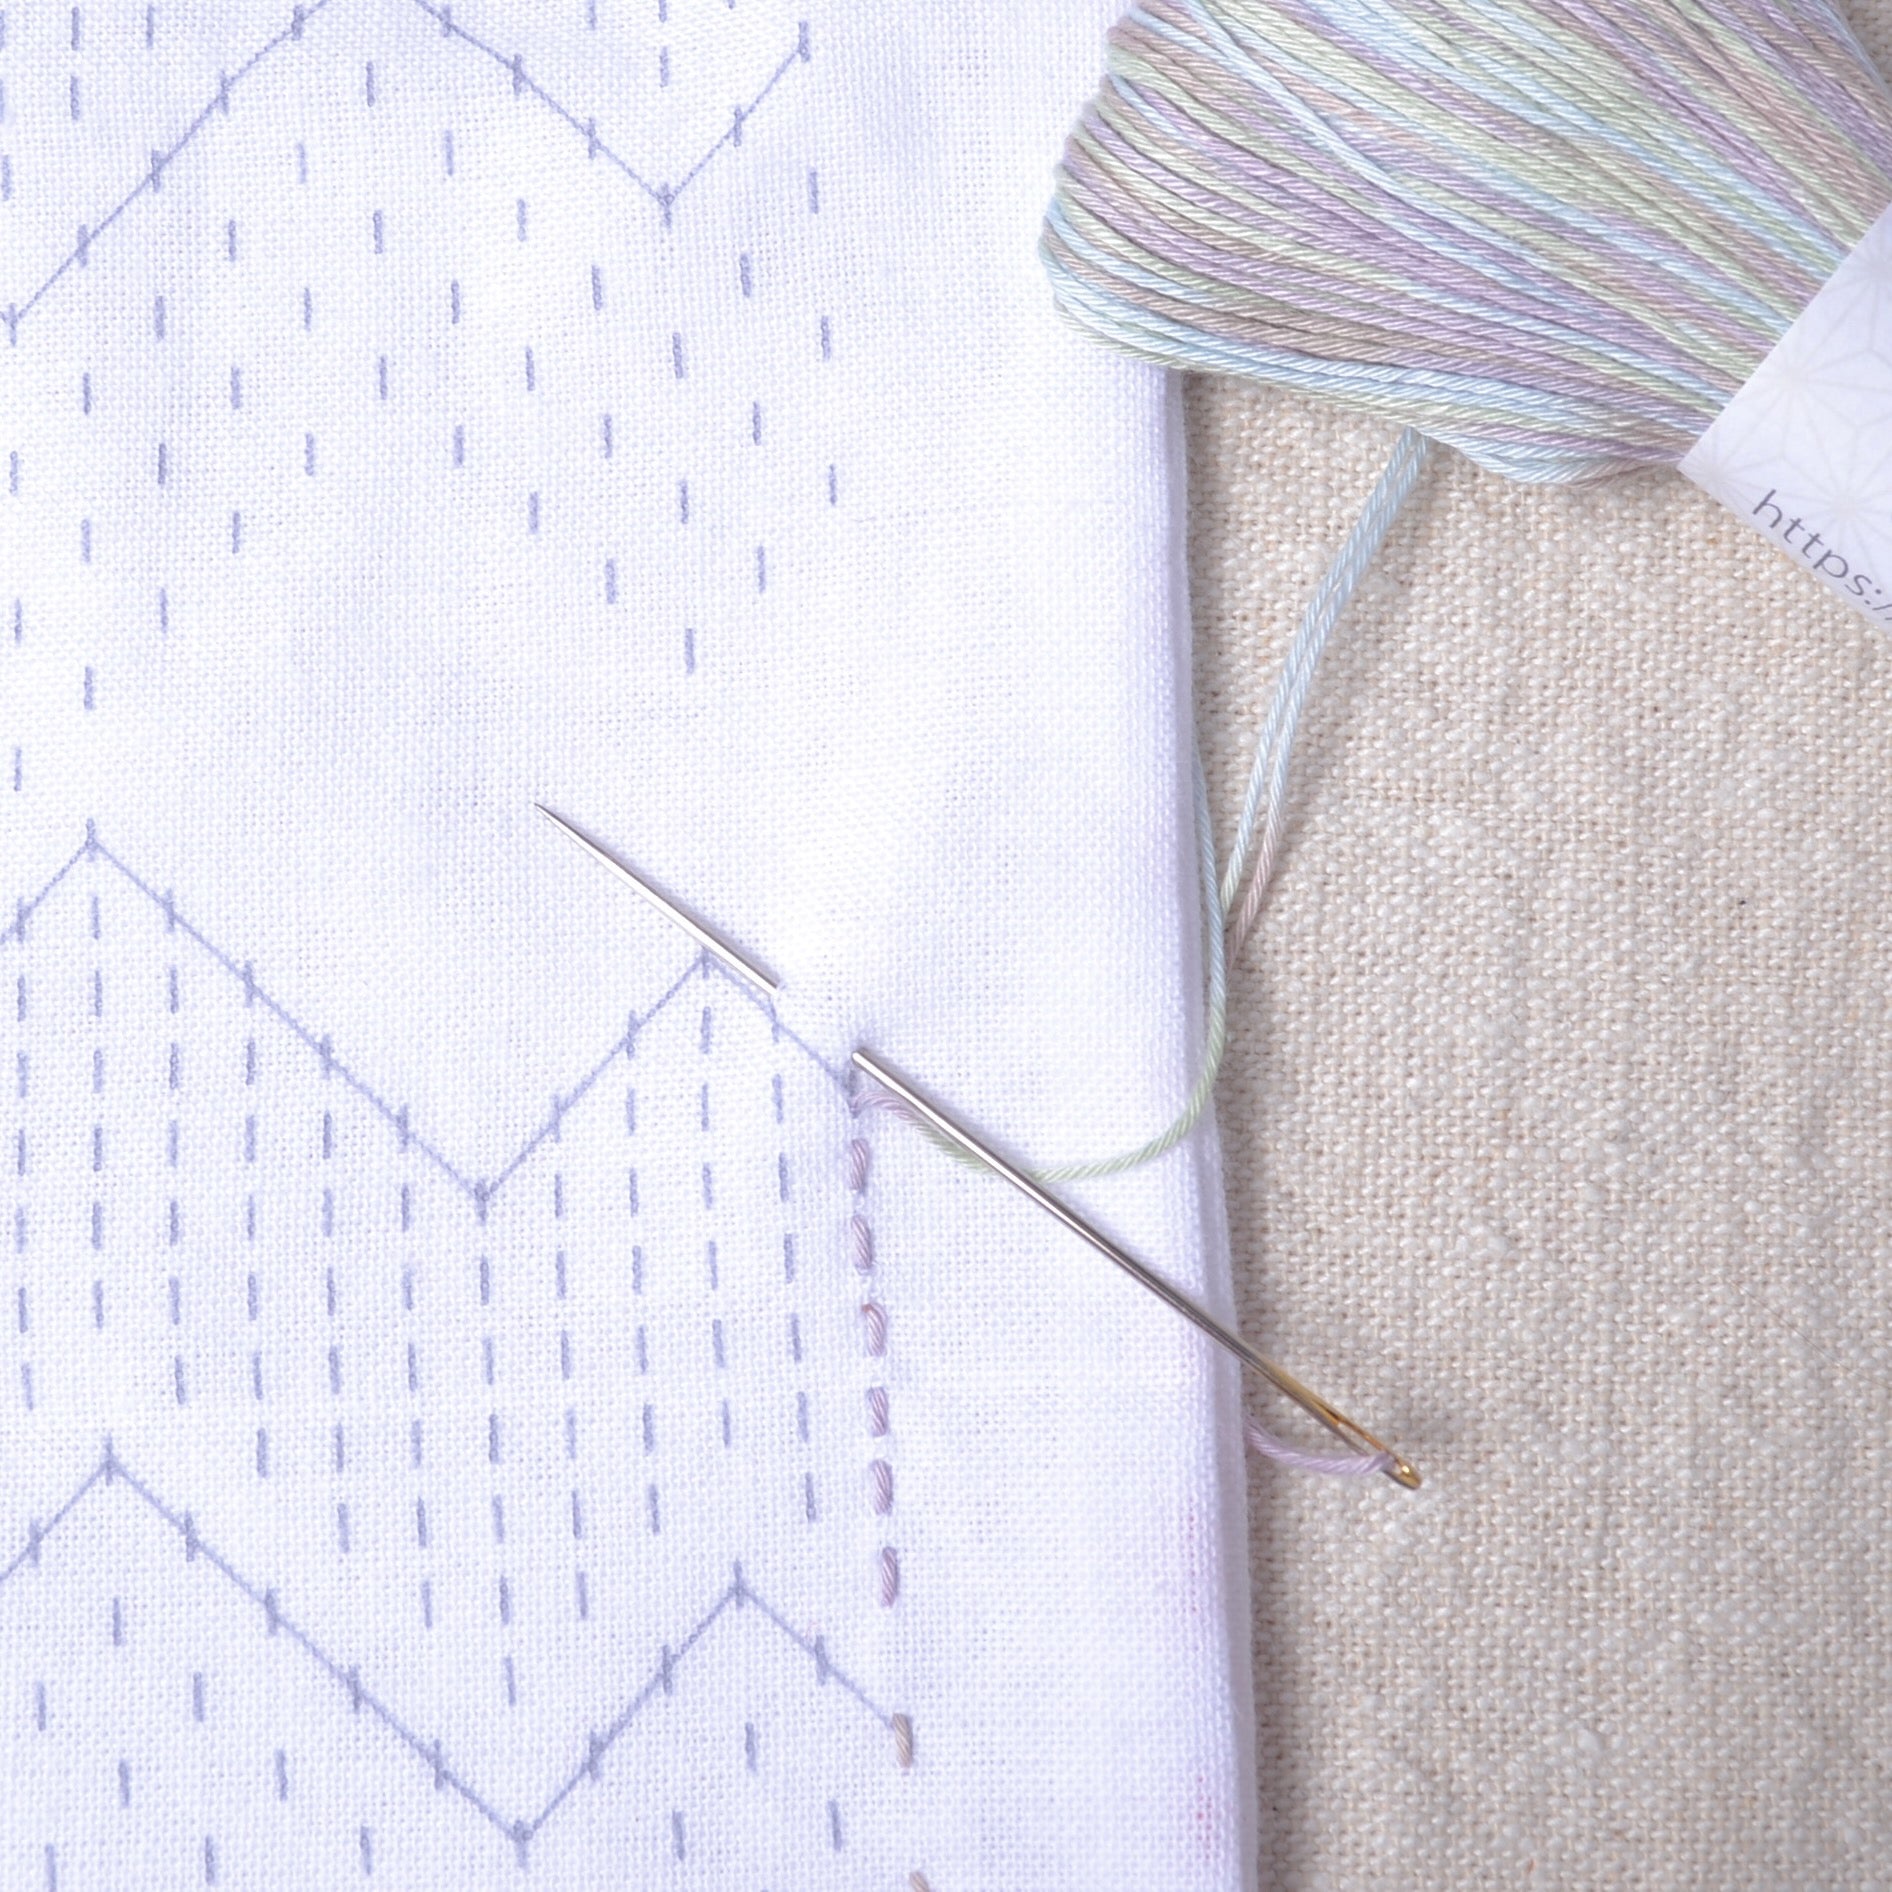 carrying stitches on Sashiko Sampler, Textile Lab "Peaks" ready to stitch fabric